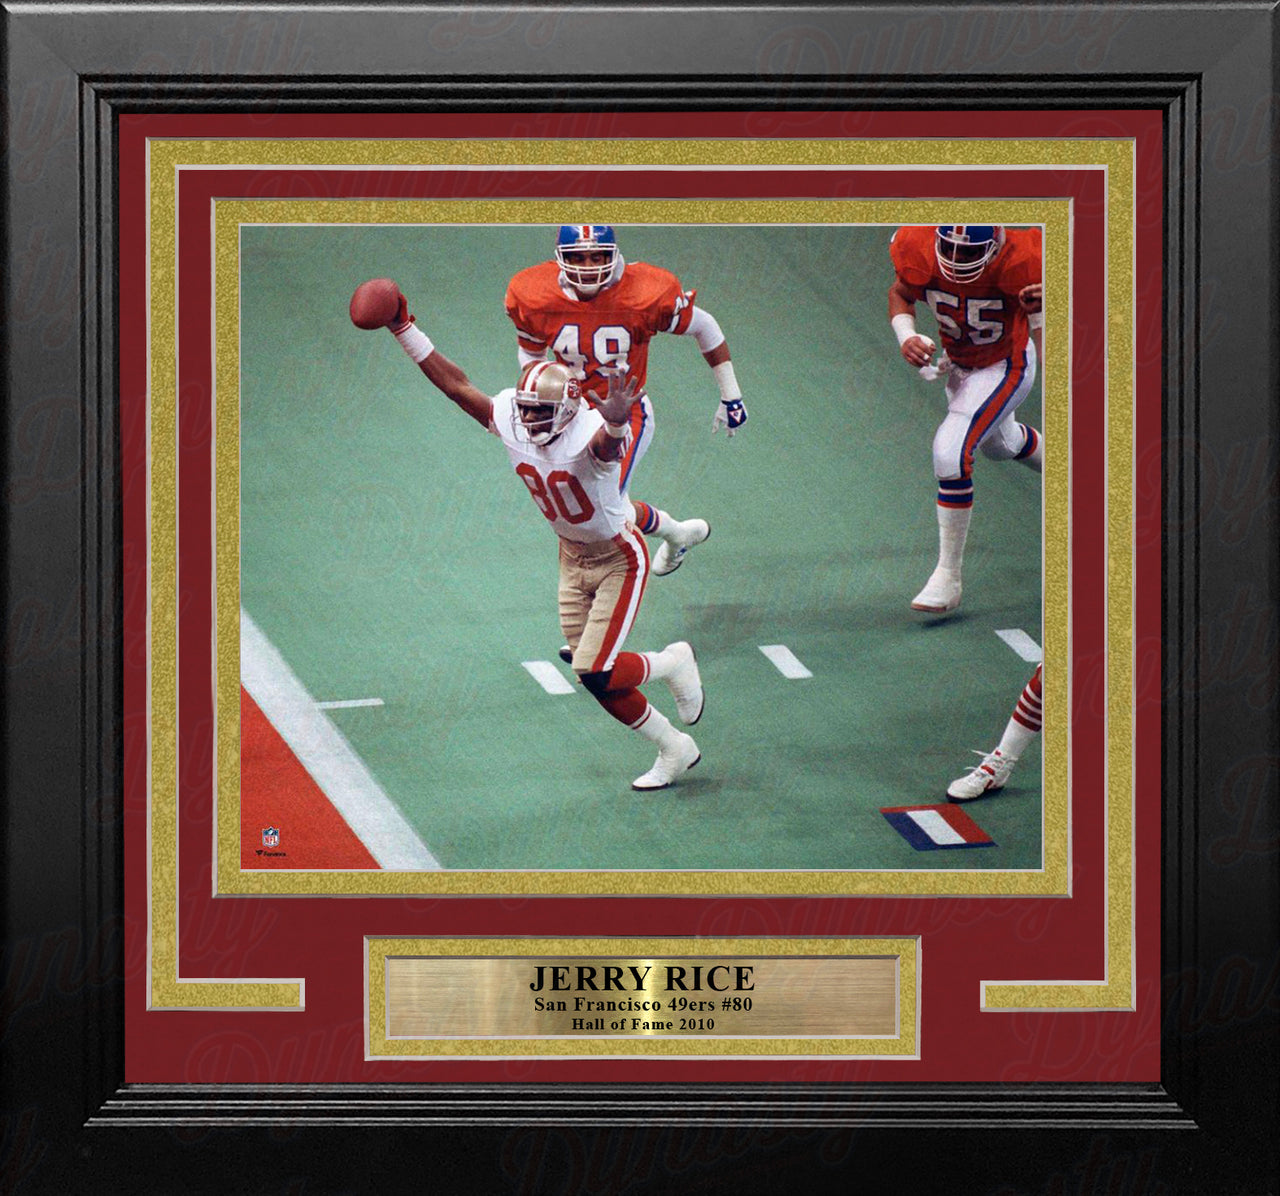 Jerry Rice Super Bowl XXIV Touchdown San Francisco 49ers 8" x 10" Framed Football Photo